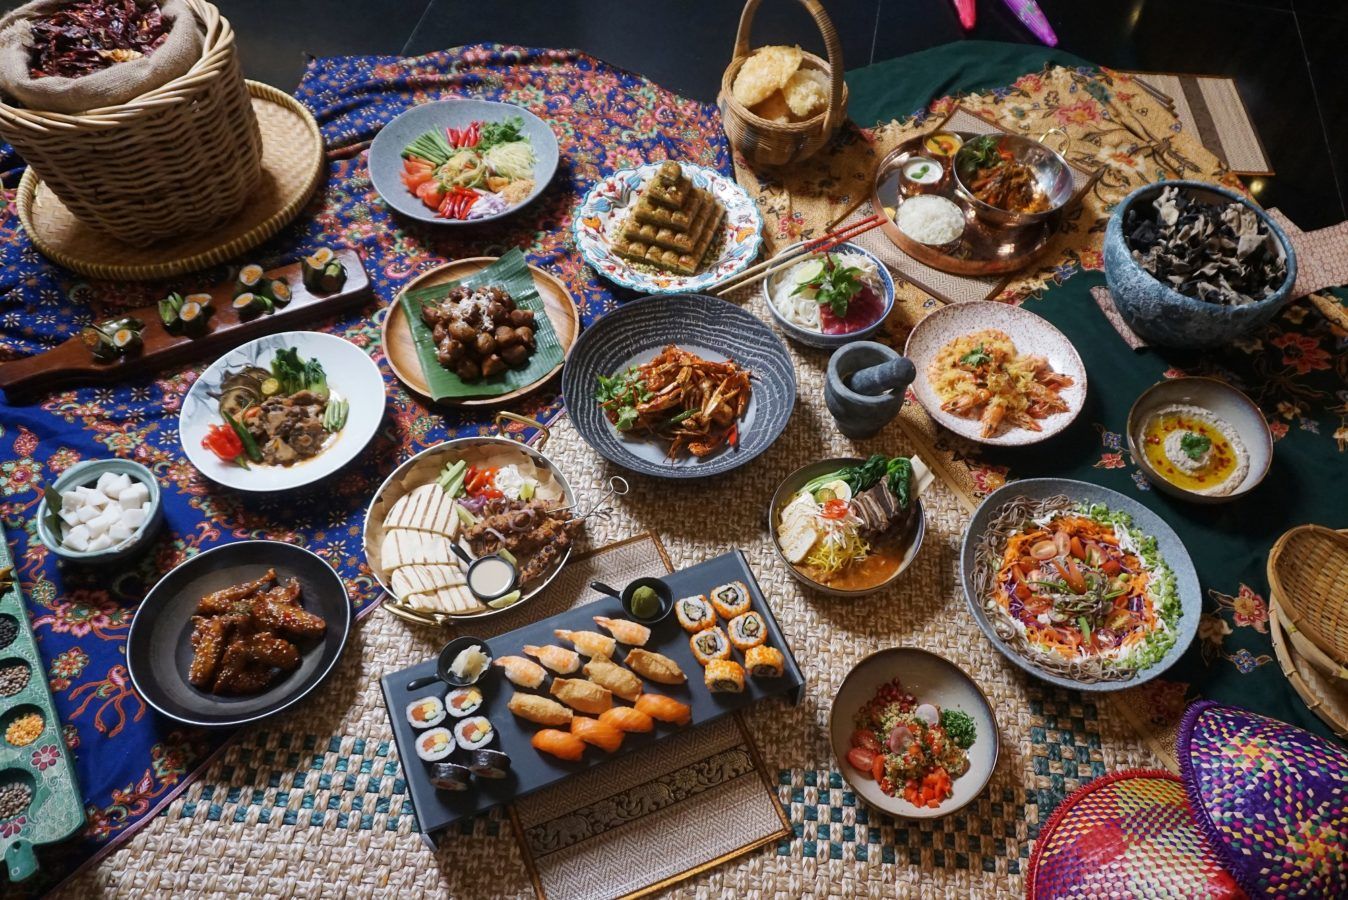 Ramadhan buffet